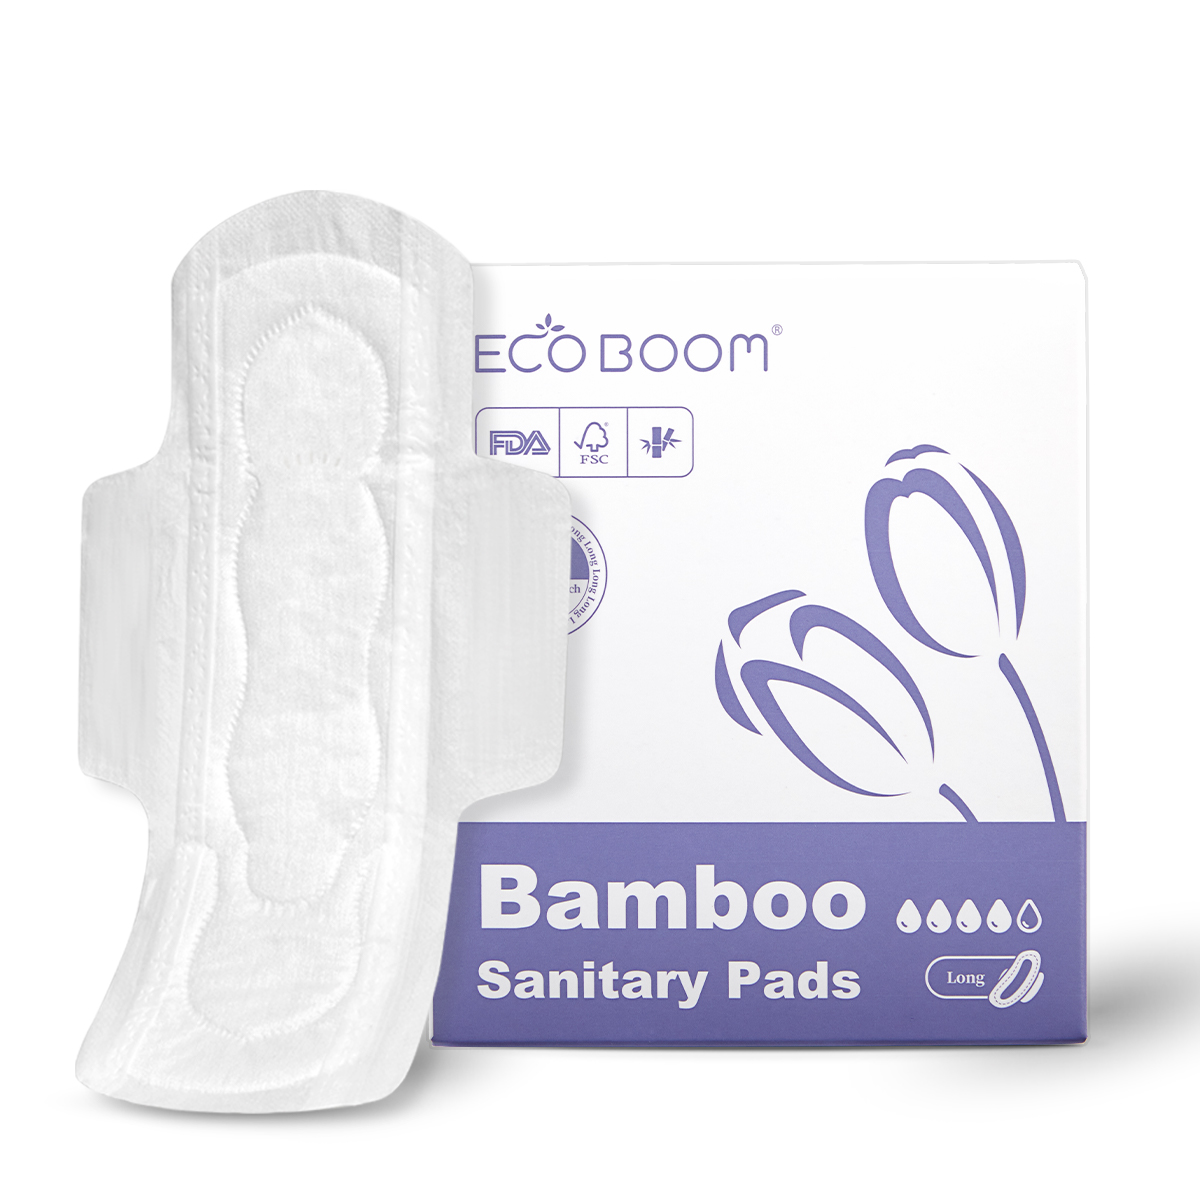 ECO BOOM bamboo fibre sanitary pads partnership-2